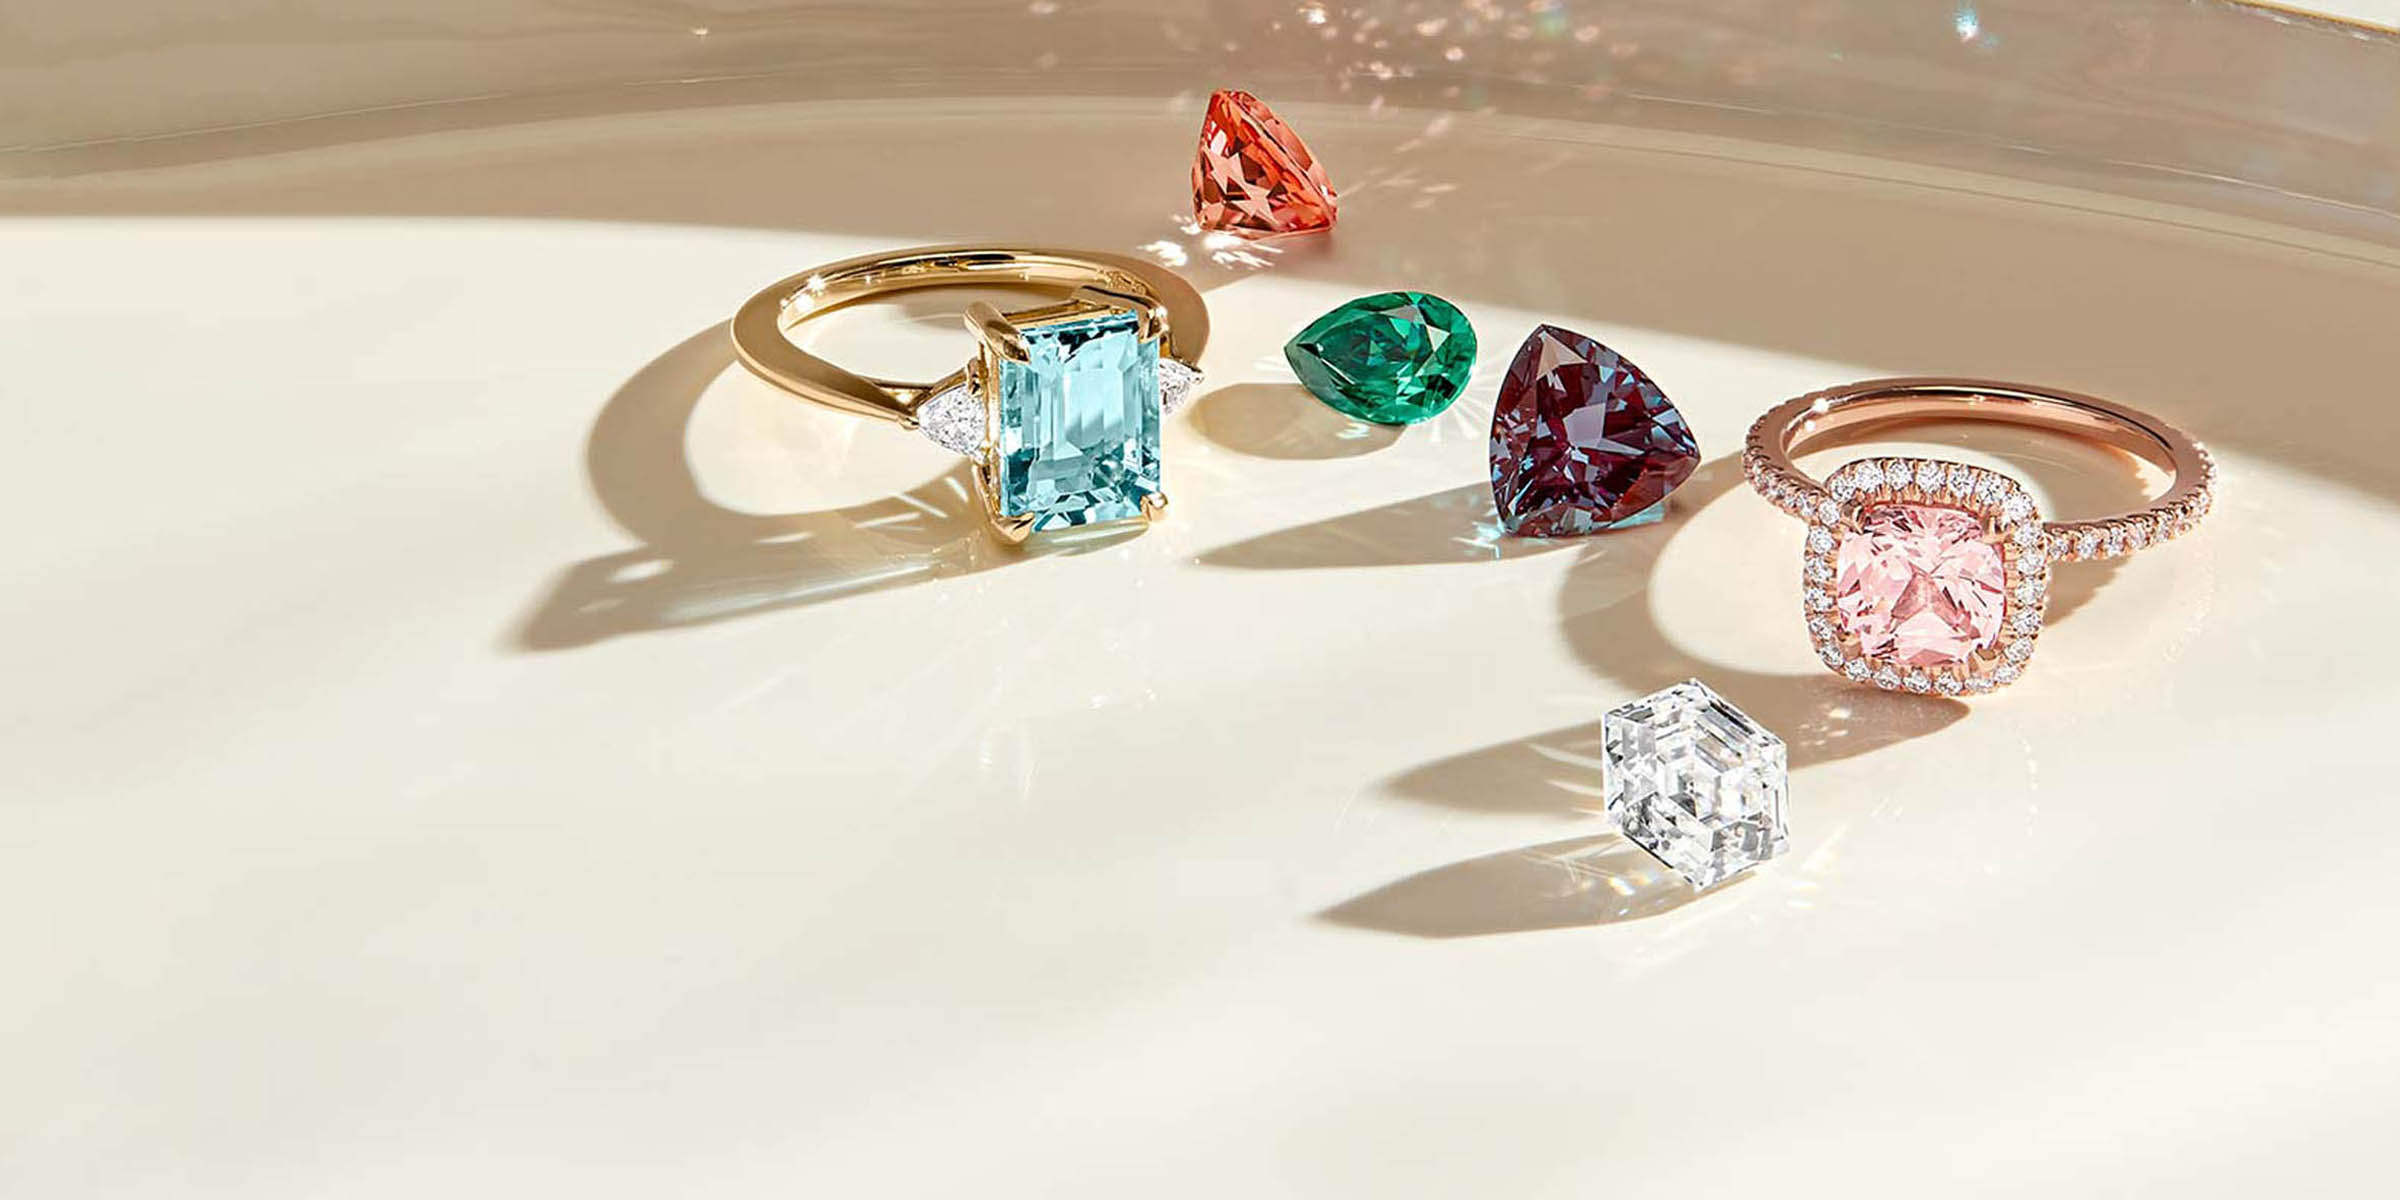 Top 10 Best Diamond Jewelry Brands in India